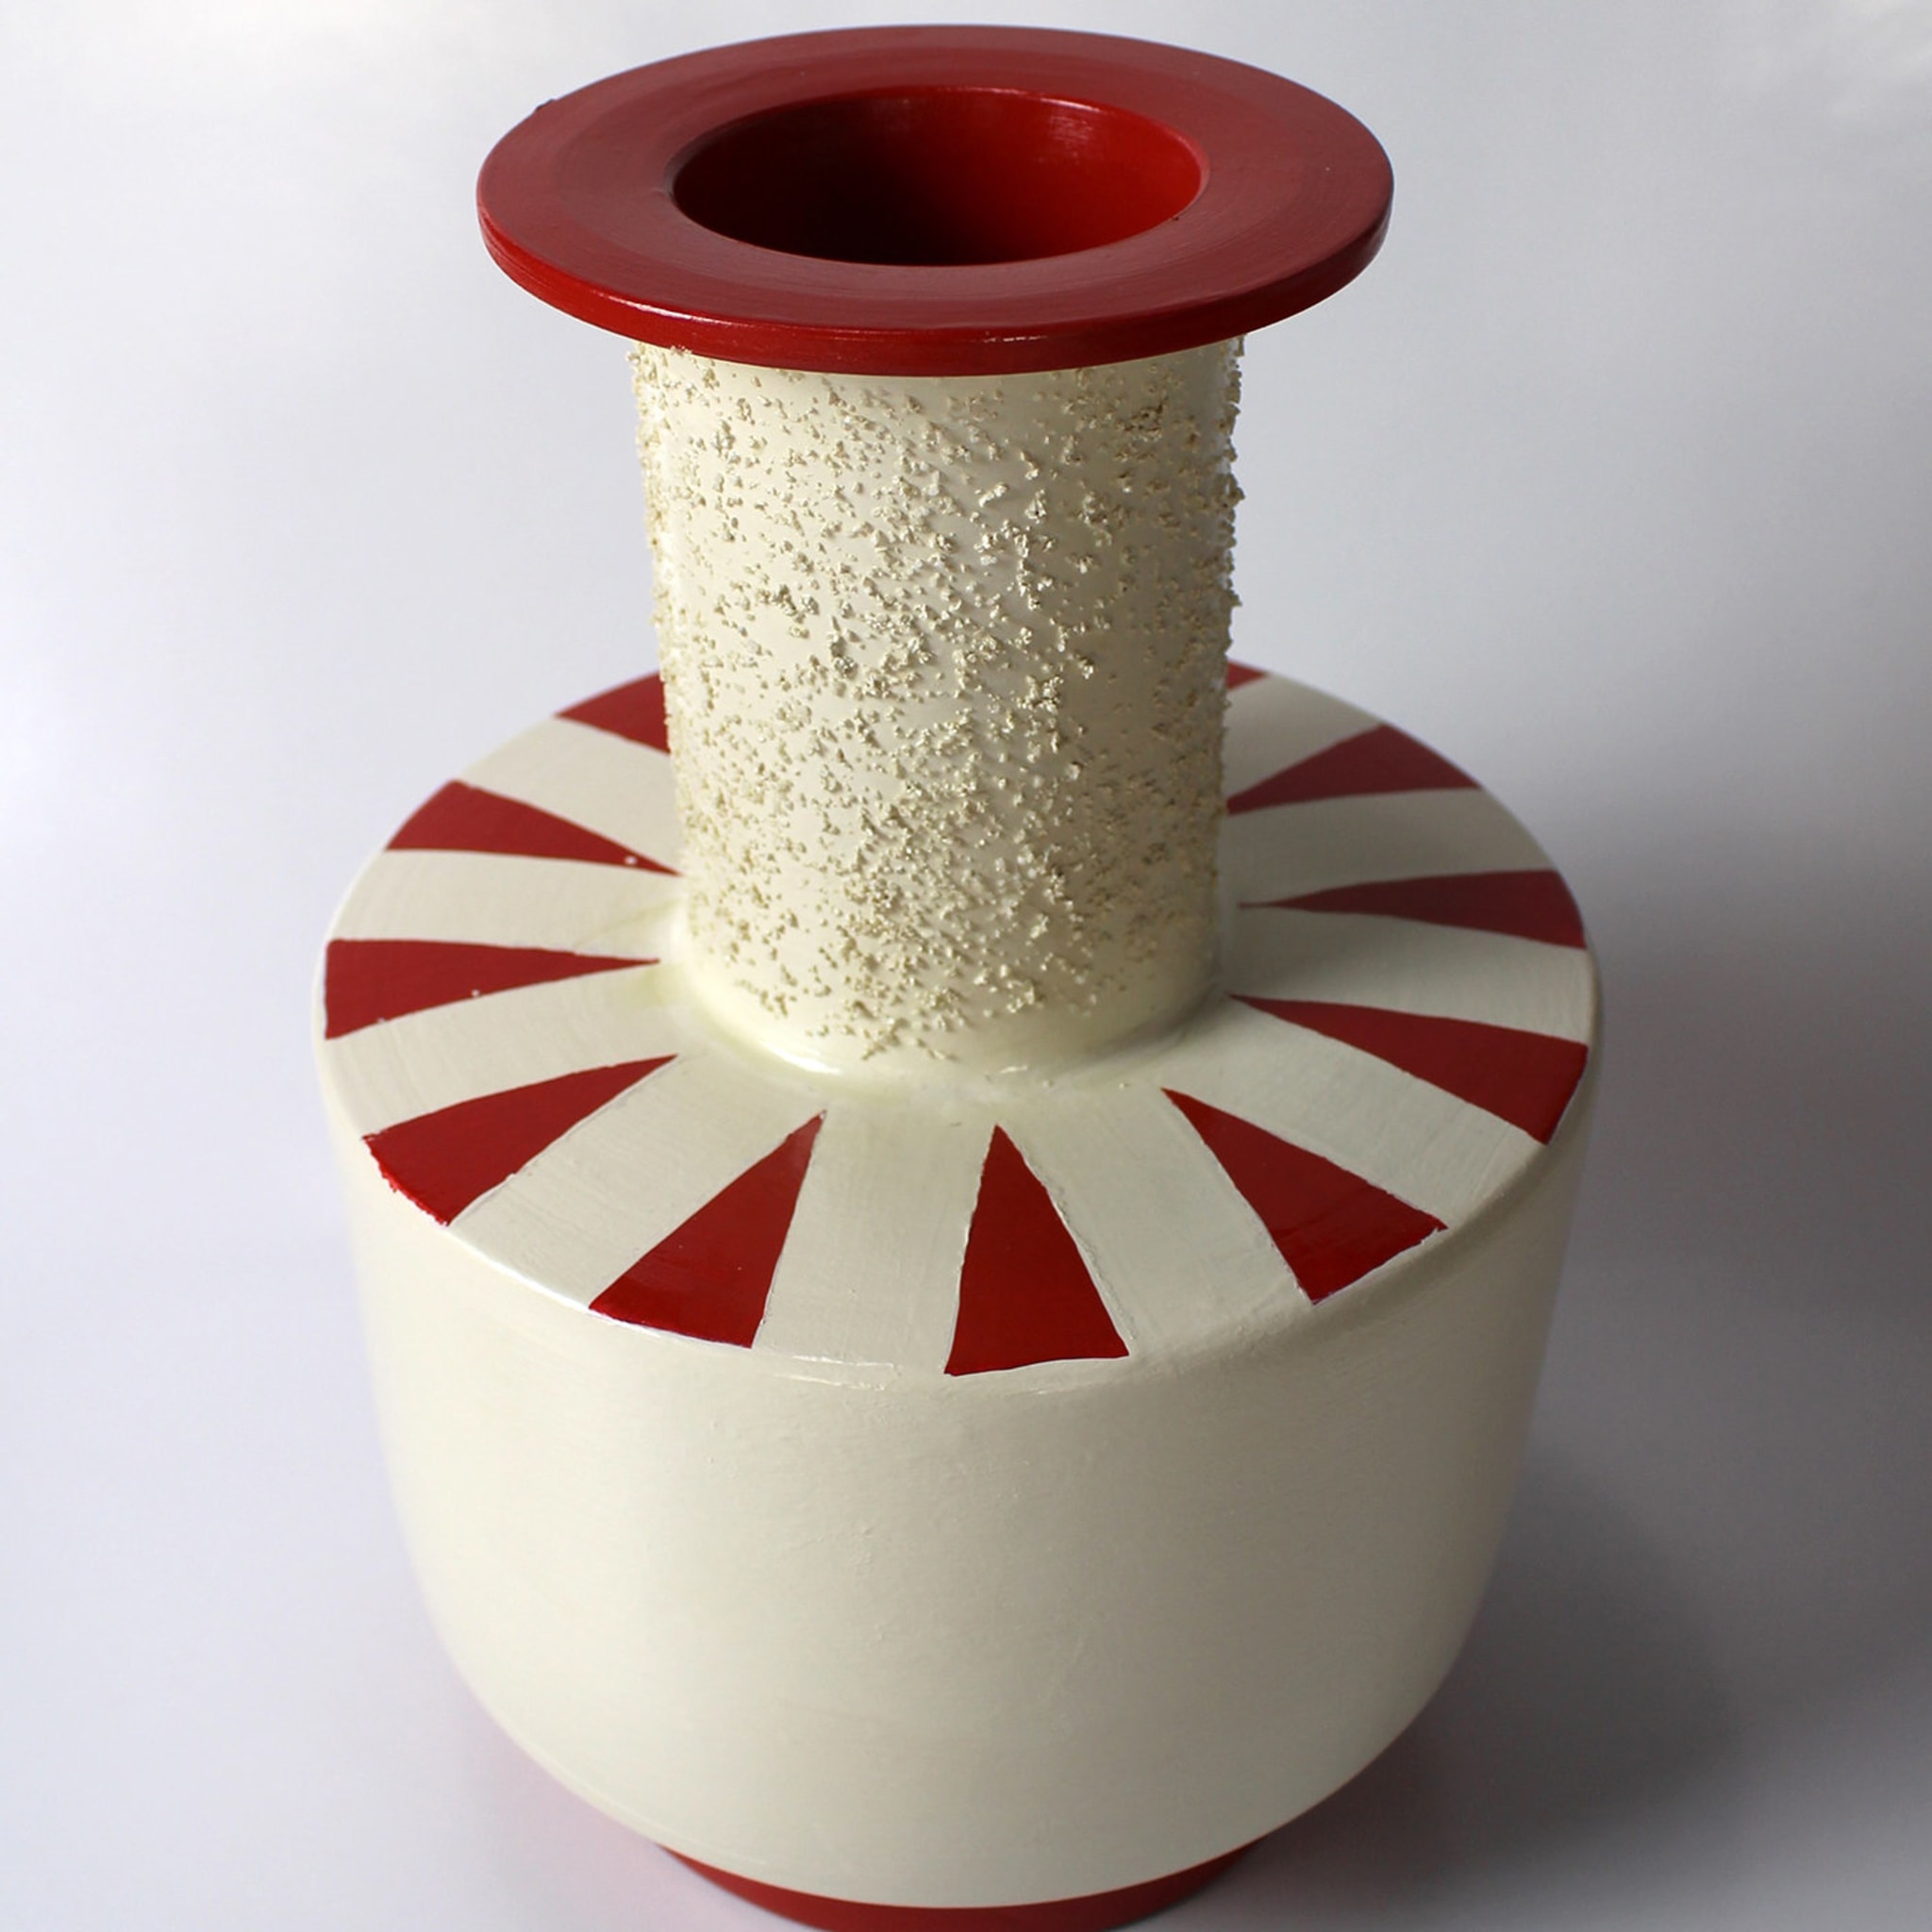 Terracotta Vase 12 by Mascia Meccani - Alternative view 4